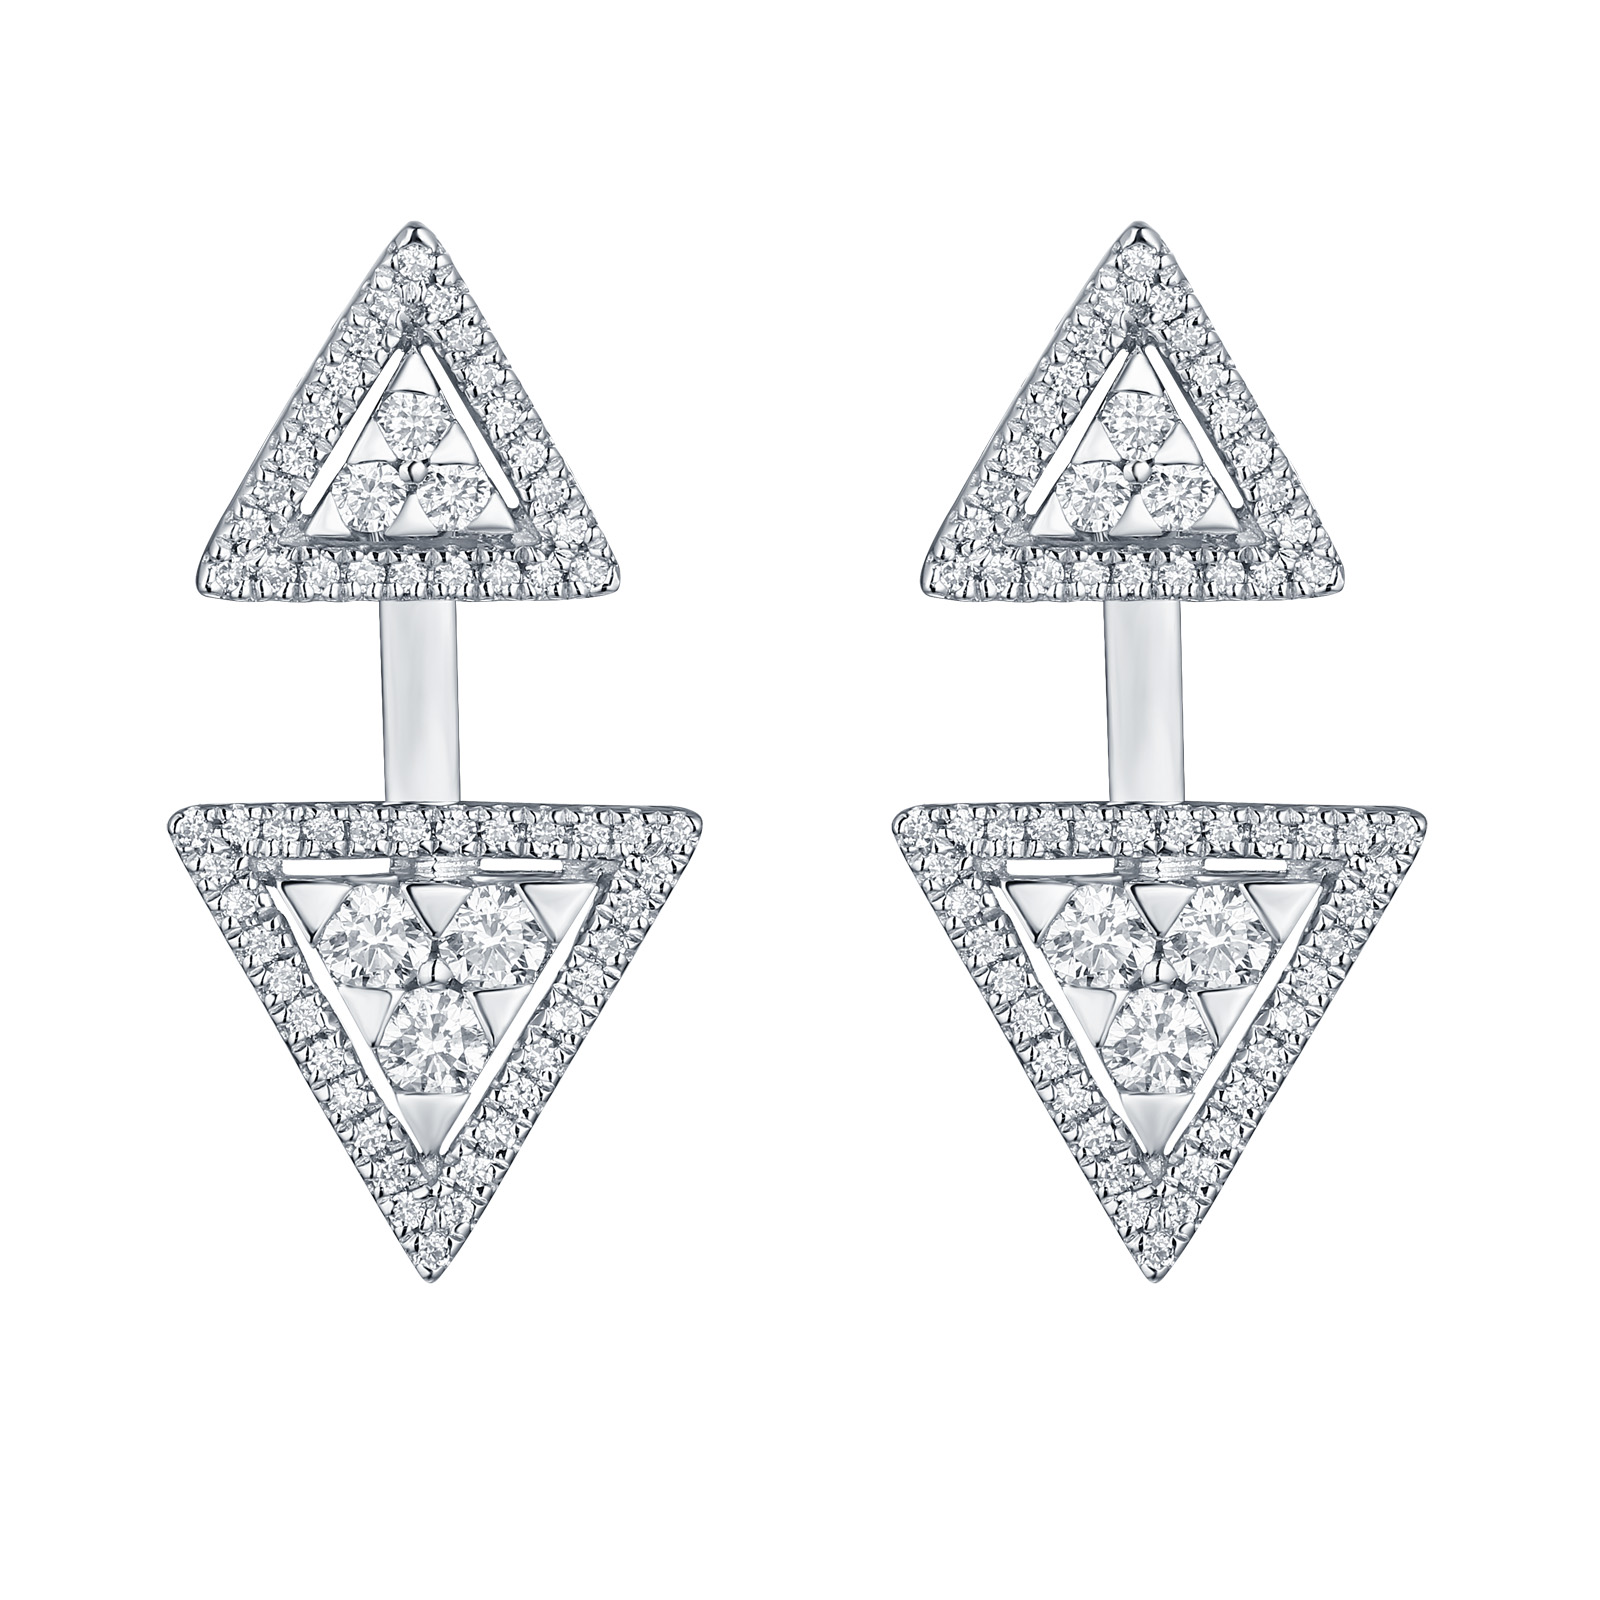 E25079WHT- 14K White Gold Diamond Earrings, 0.68 TCW